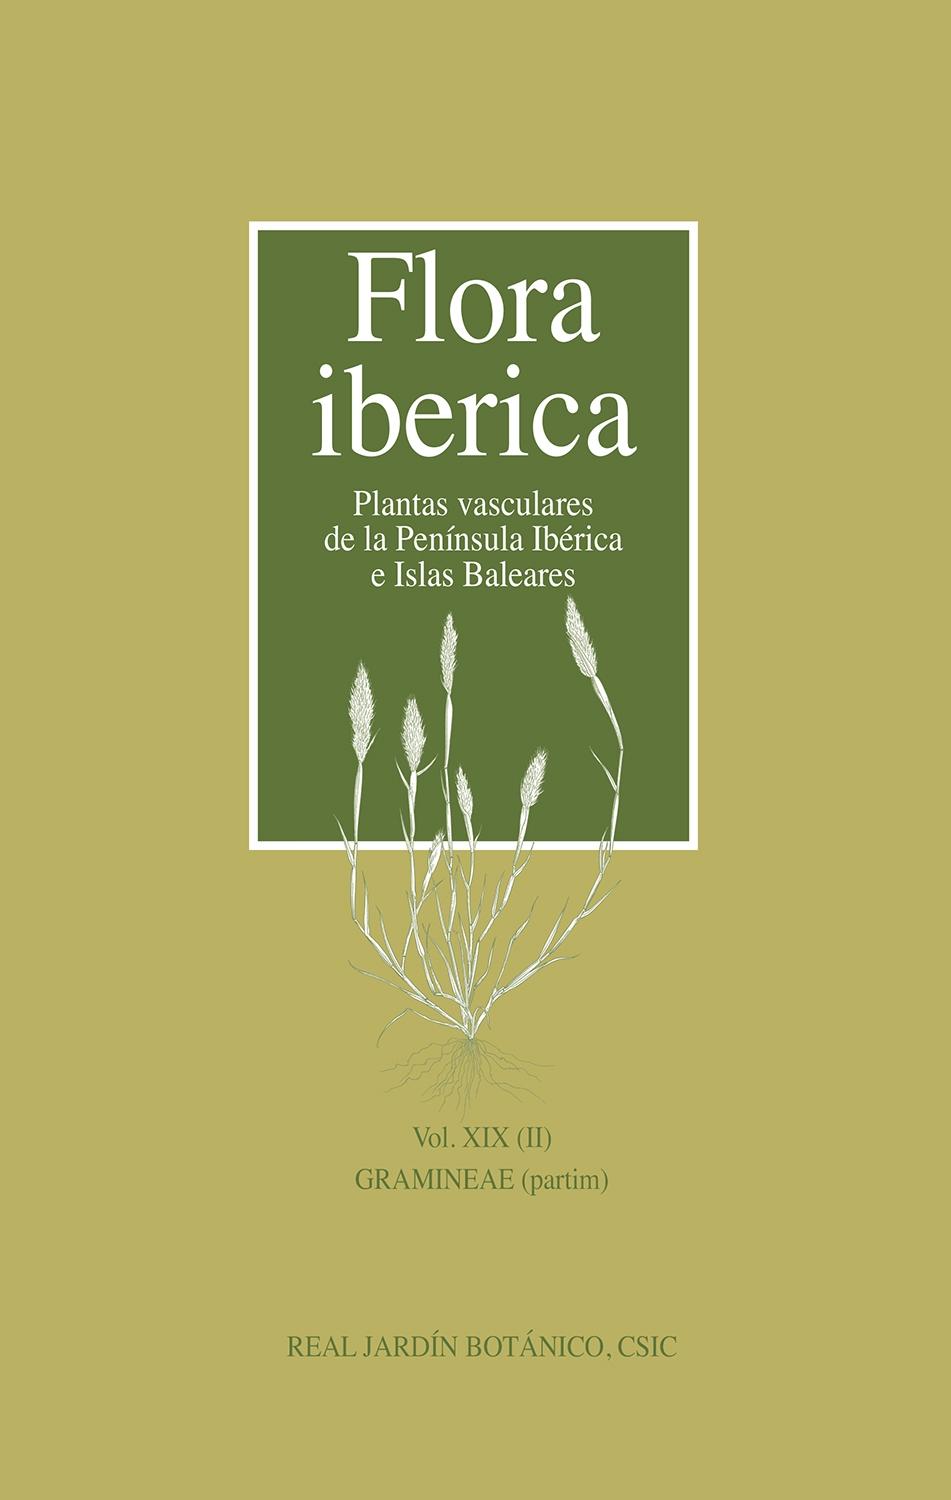 Flora ibérica. Vol. XIX (II), Gramineae (partim)